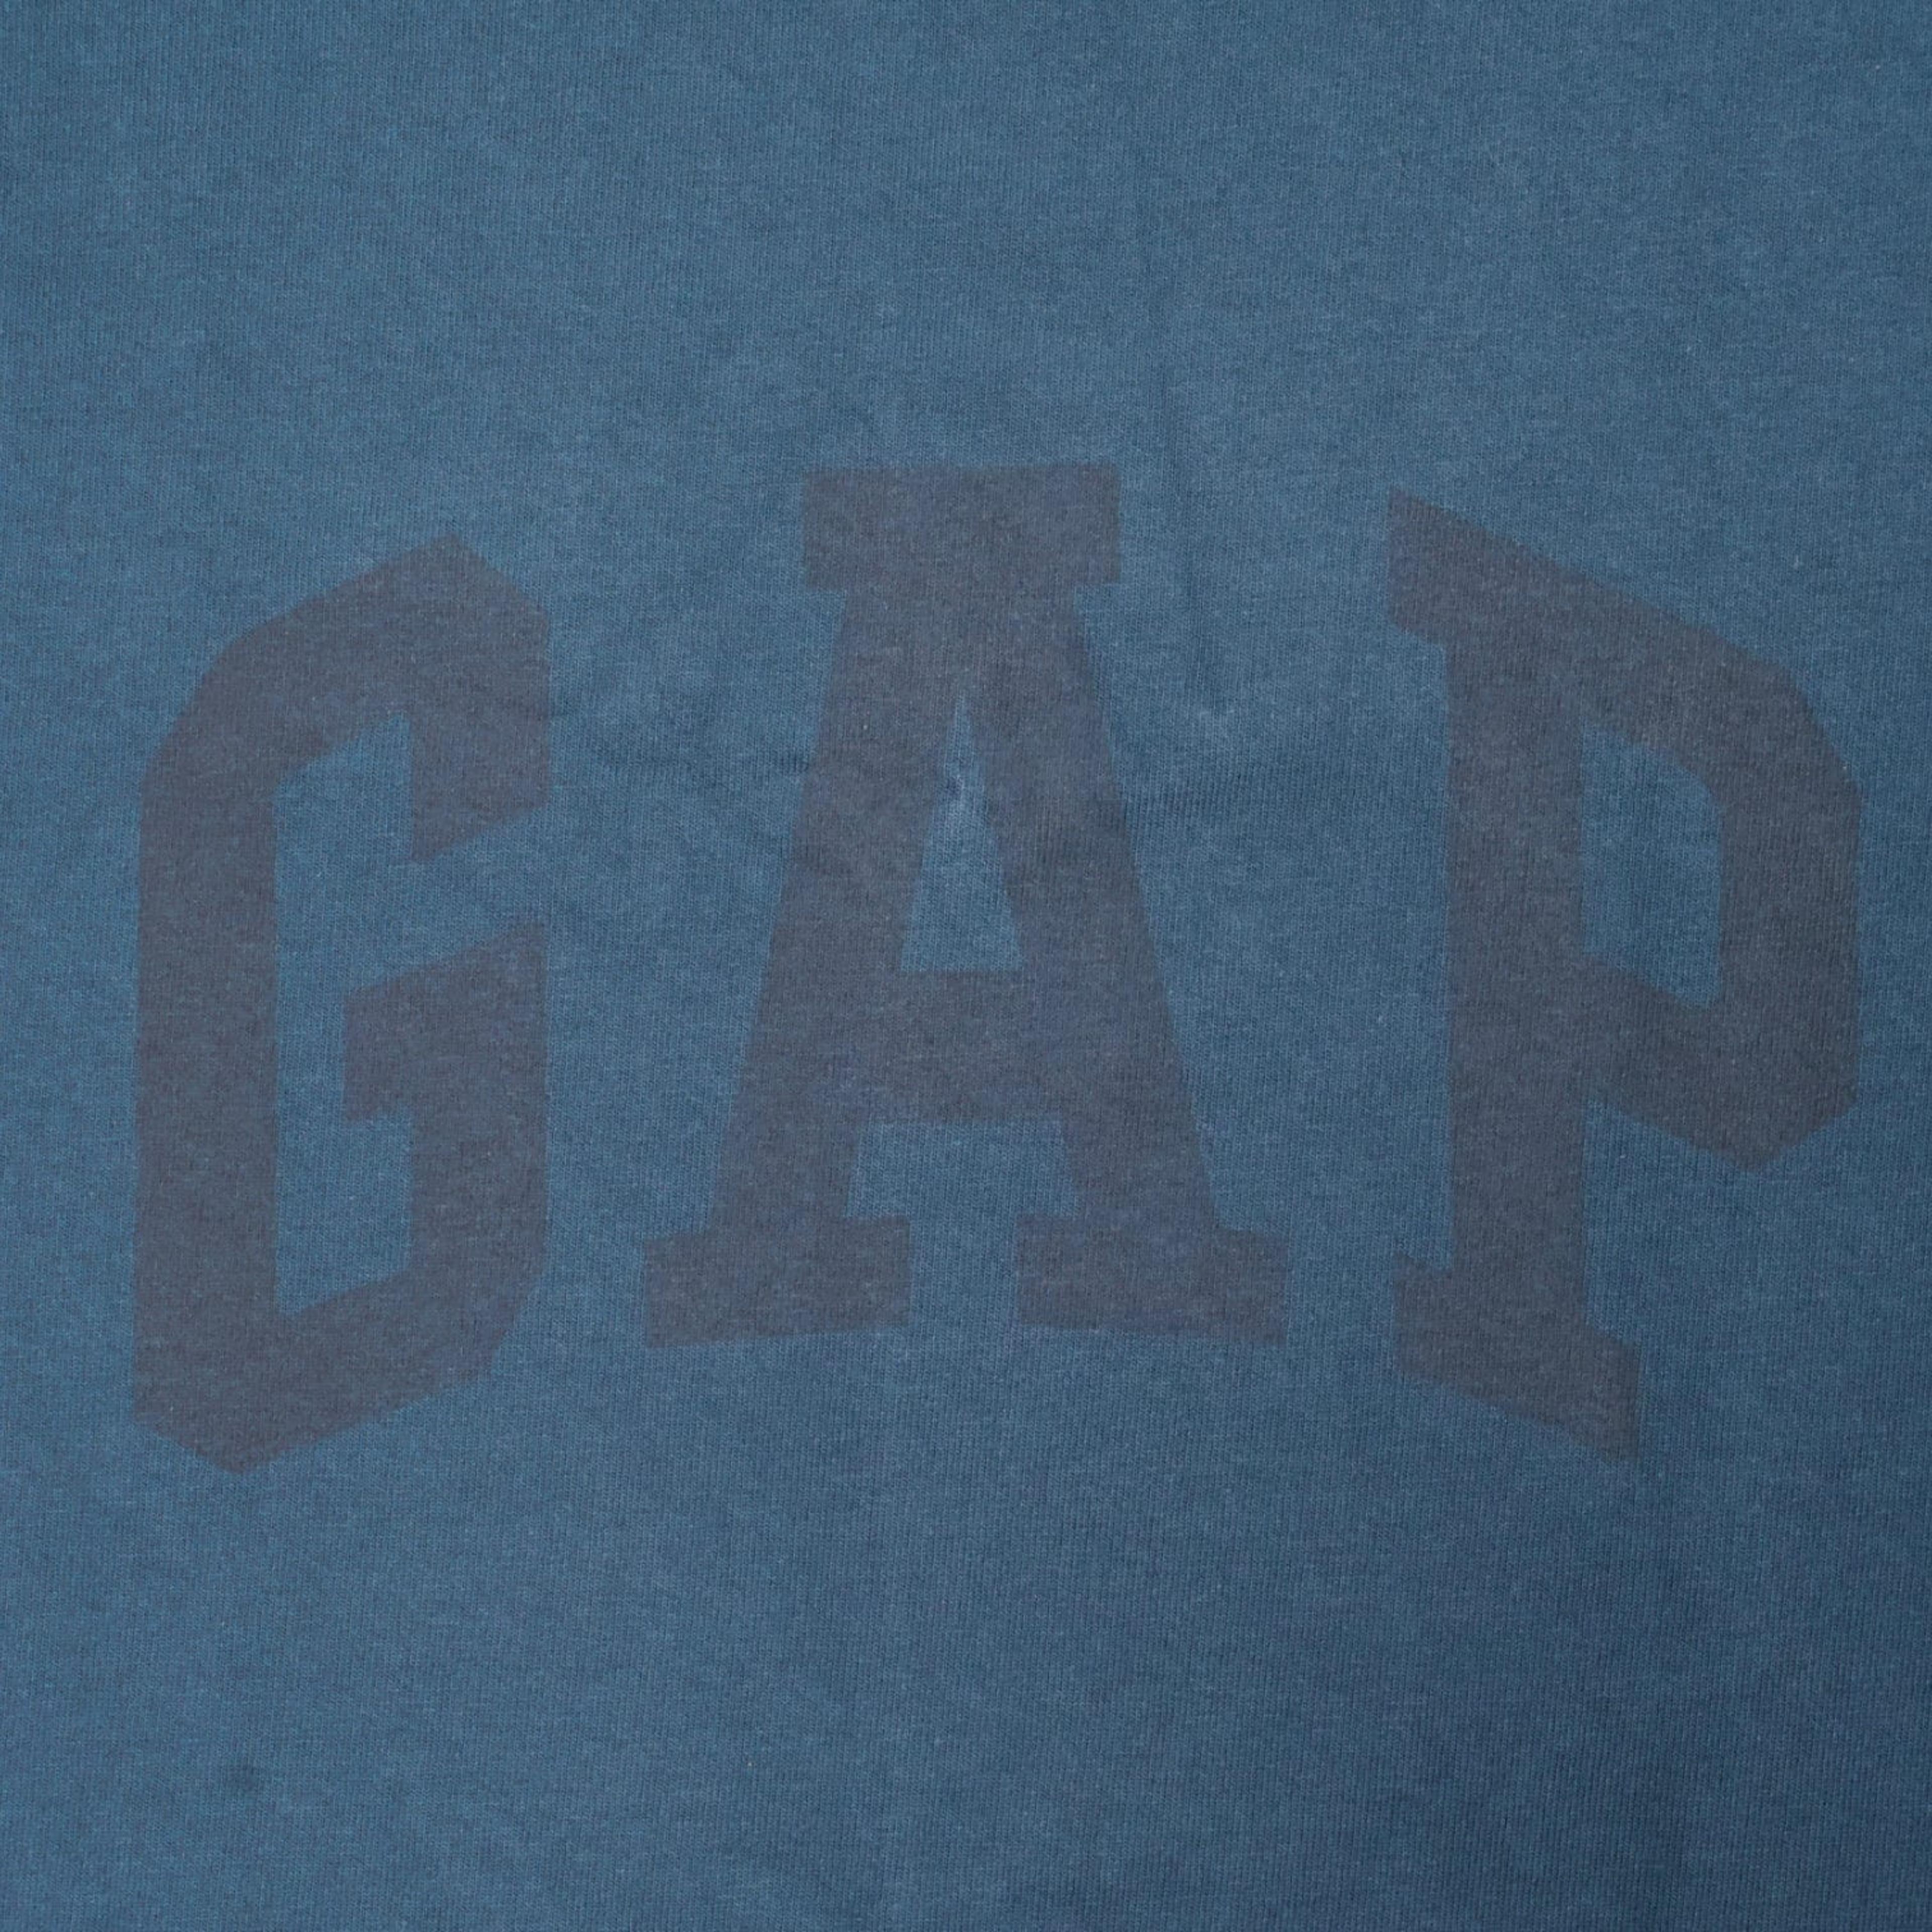 Alternate View 1 of Yeezy Gap Dove Long Sleeve Tee Shirt Dark Blue Pre-Owned